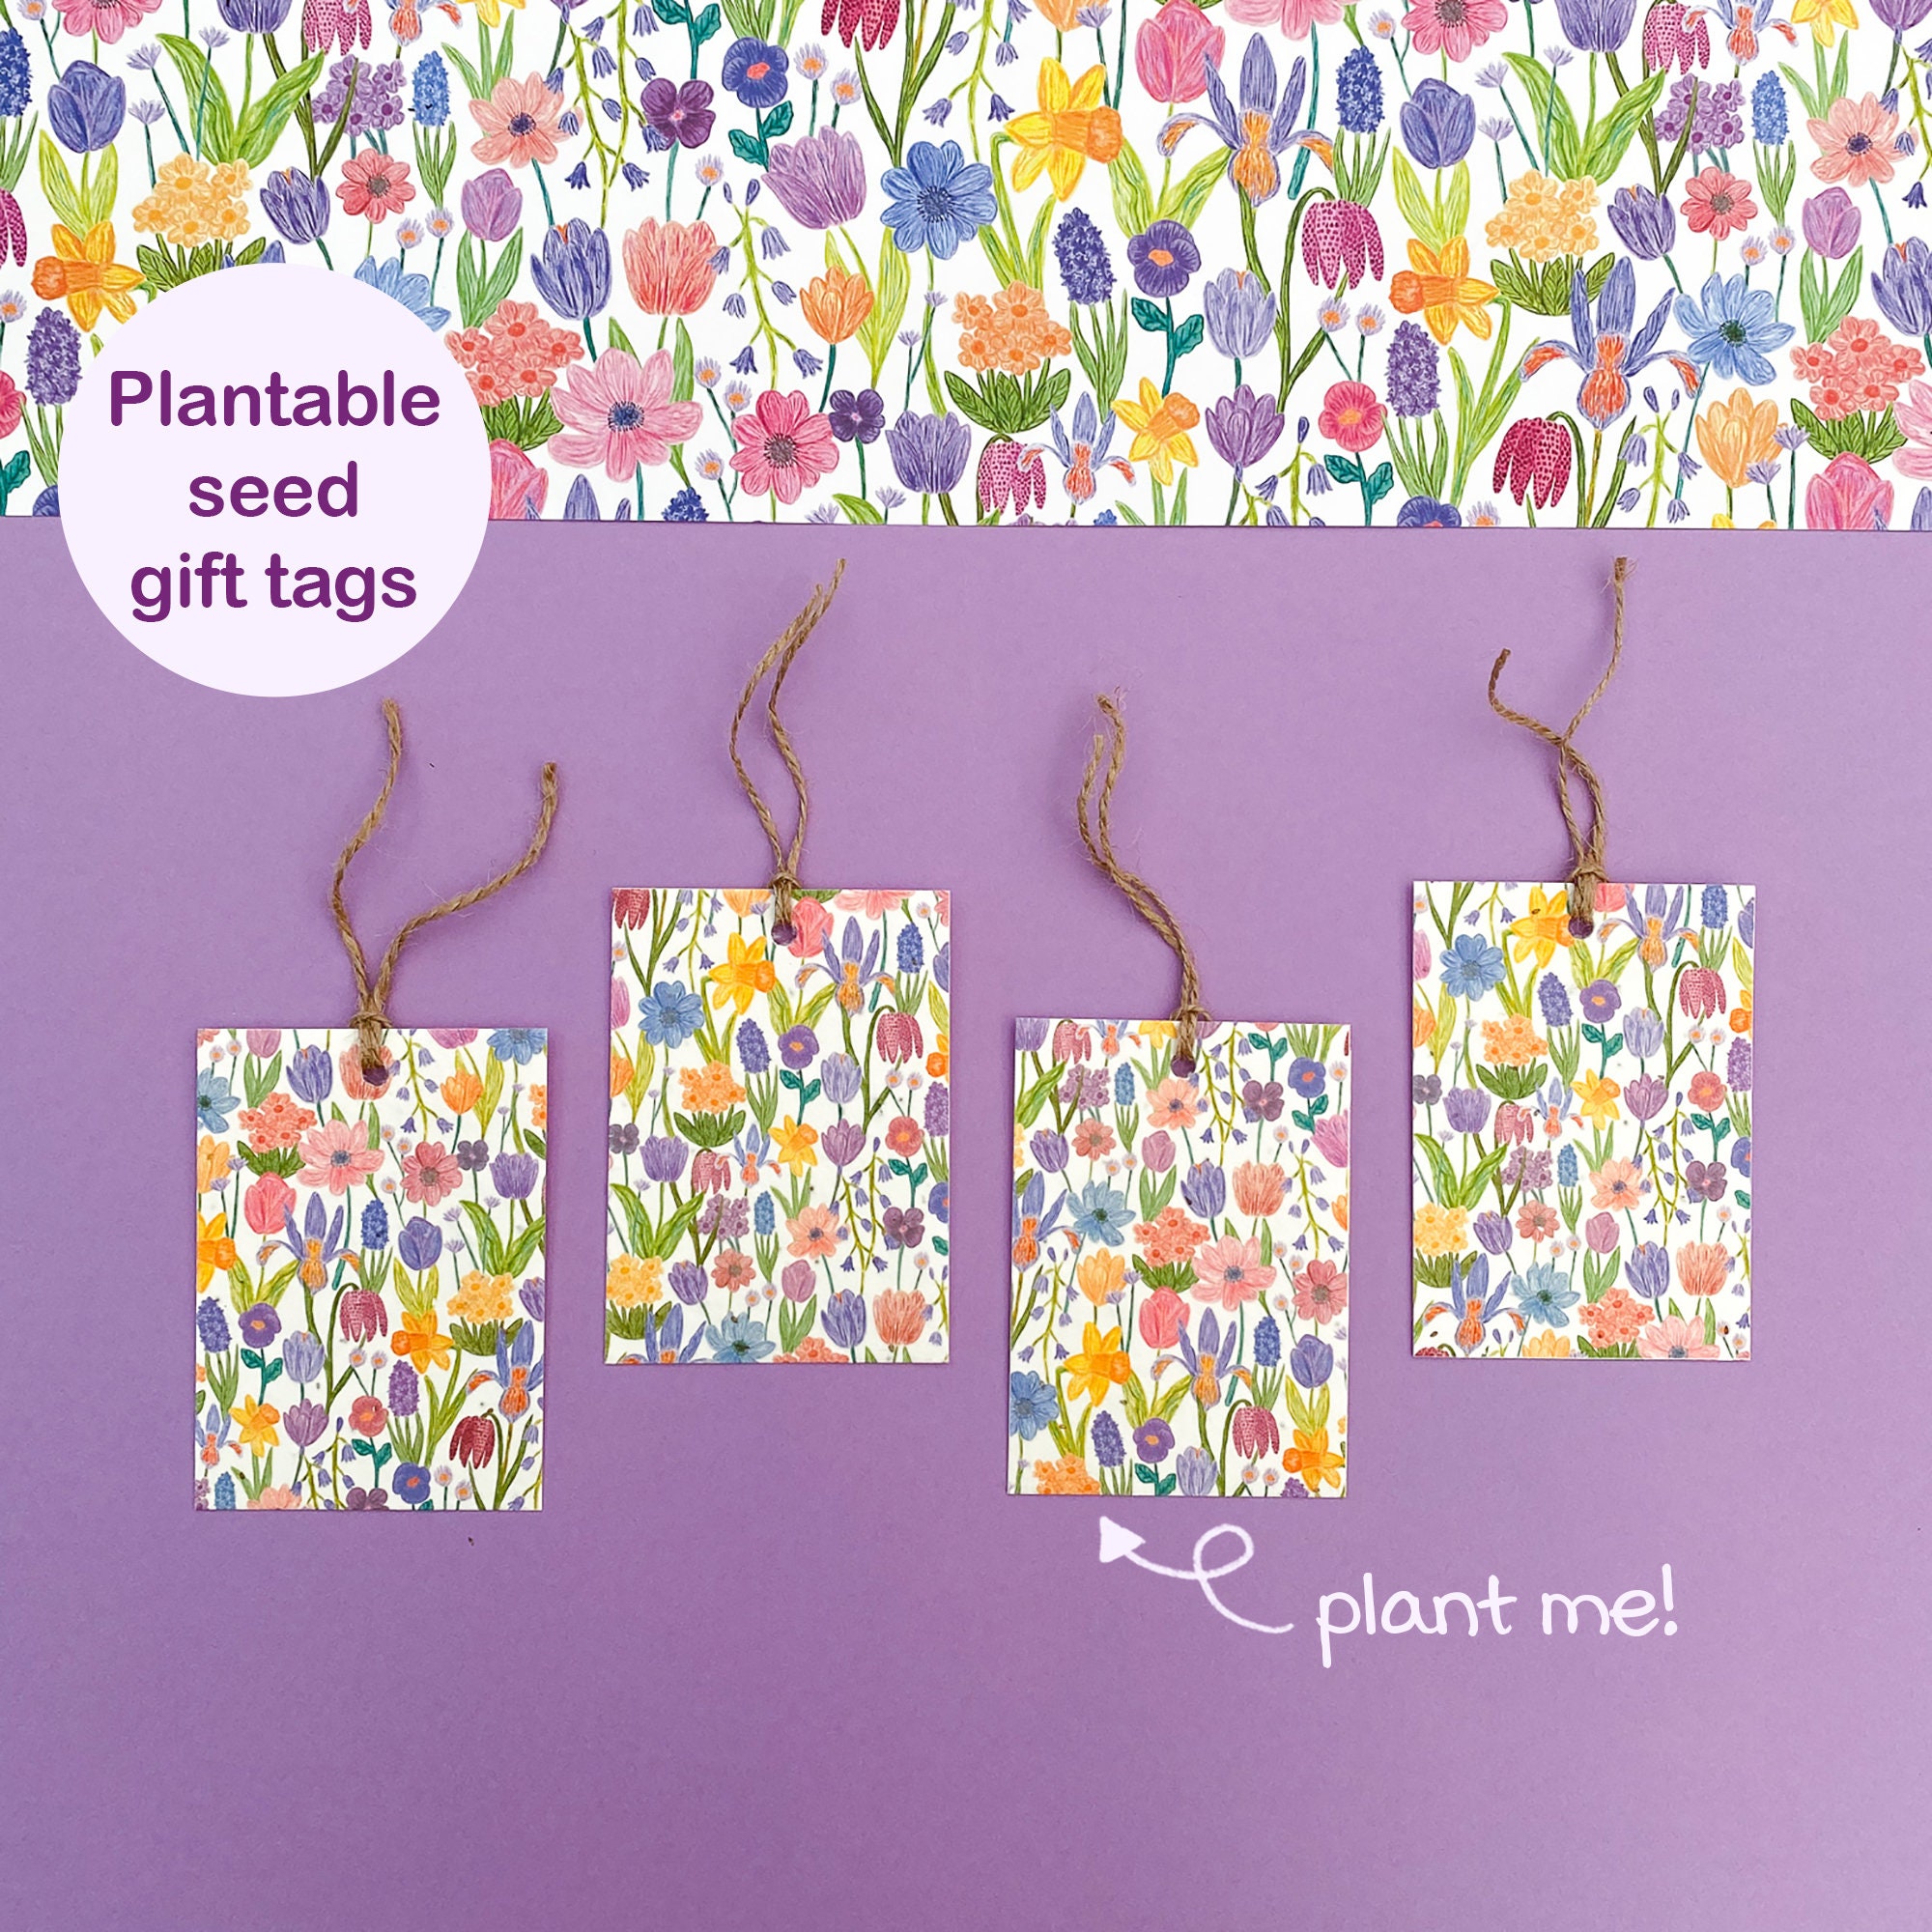 100% recycled gift tag - Maydel